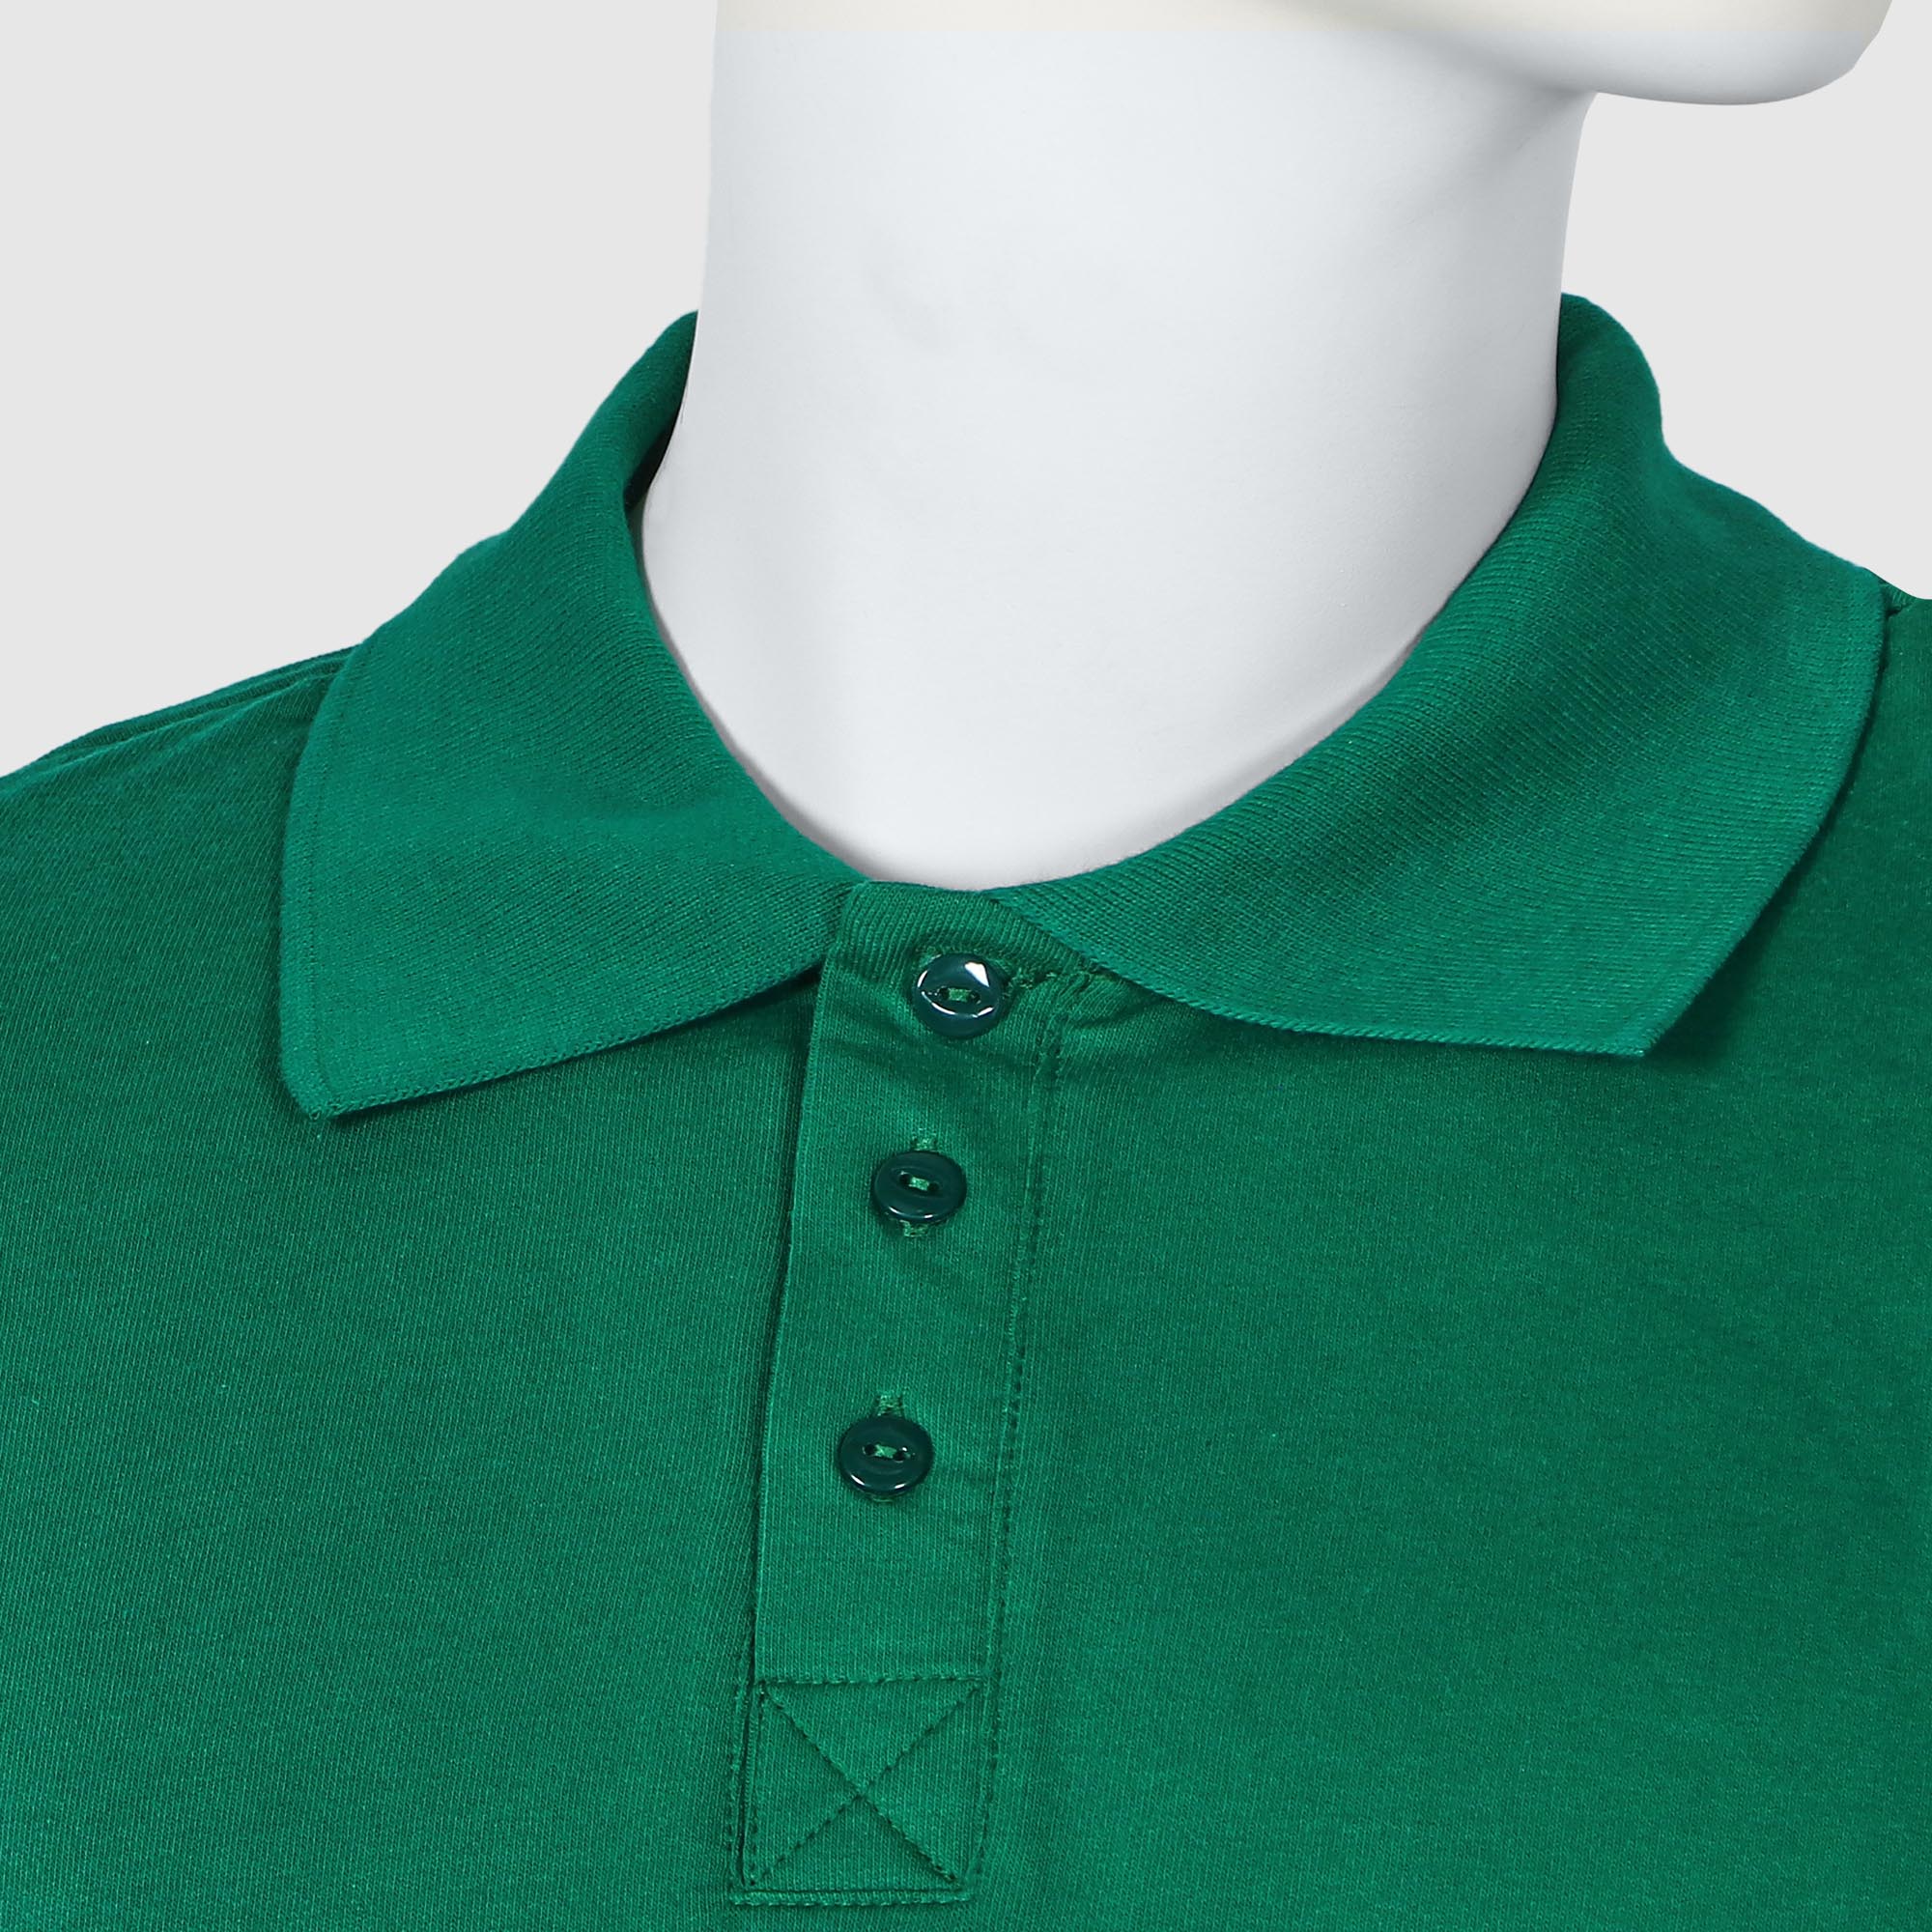 Мужская футболка-поло Diva Teks зелёная (DTD-09), цвет зелёный, размер 54-56 - фото 4